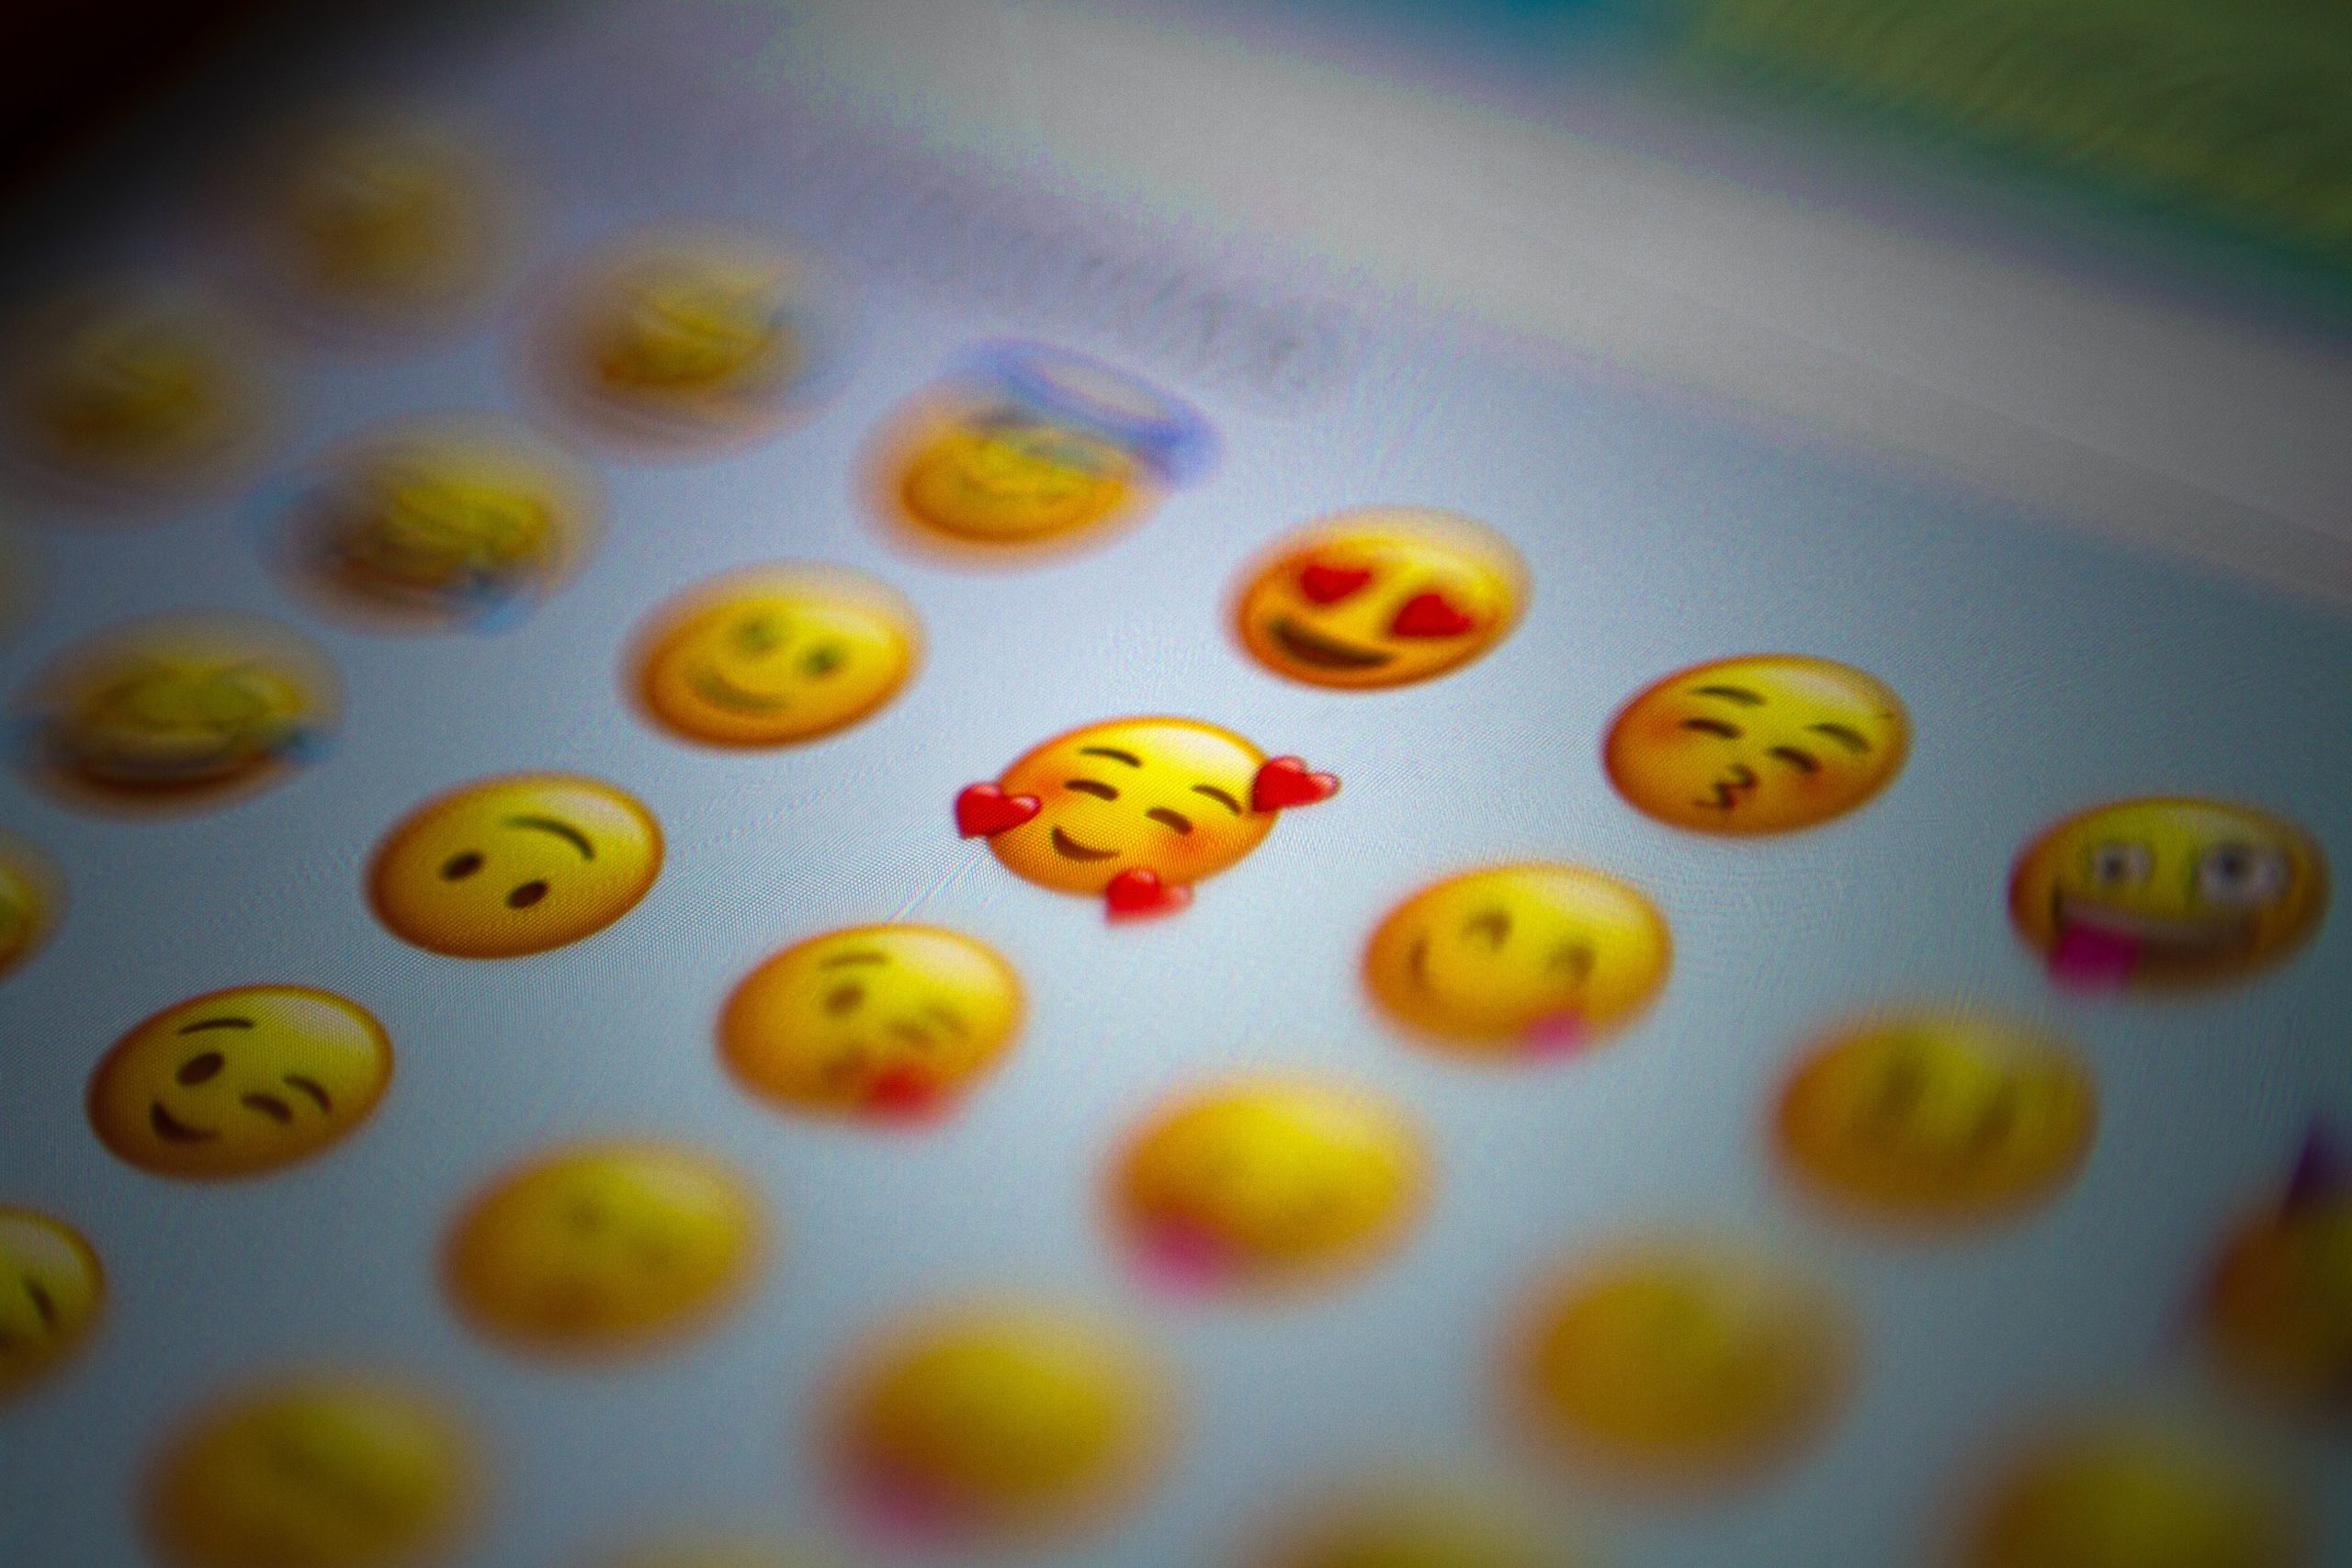 Various emojis displayed on a screen.